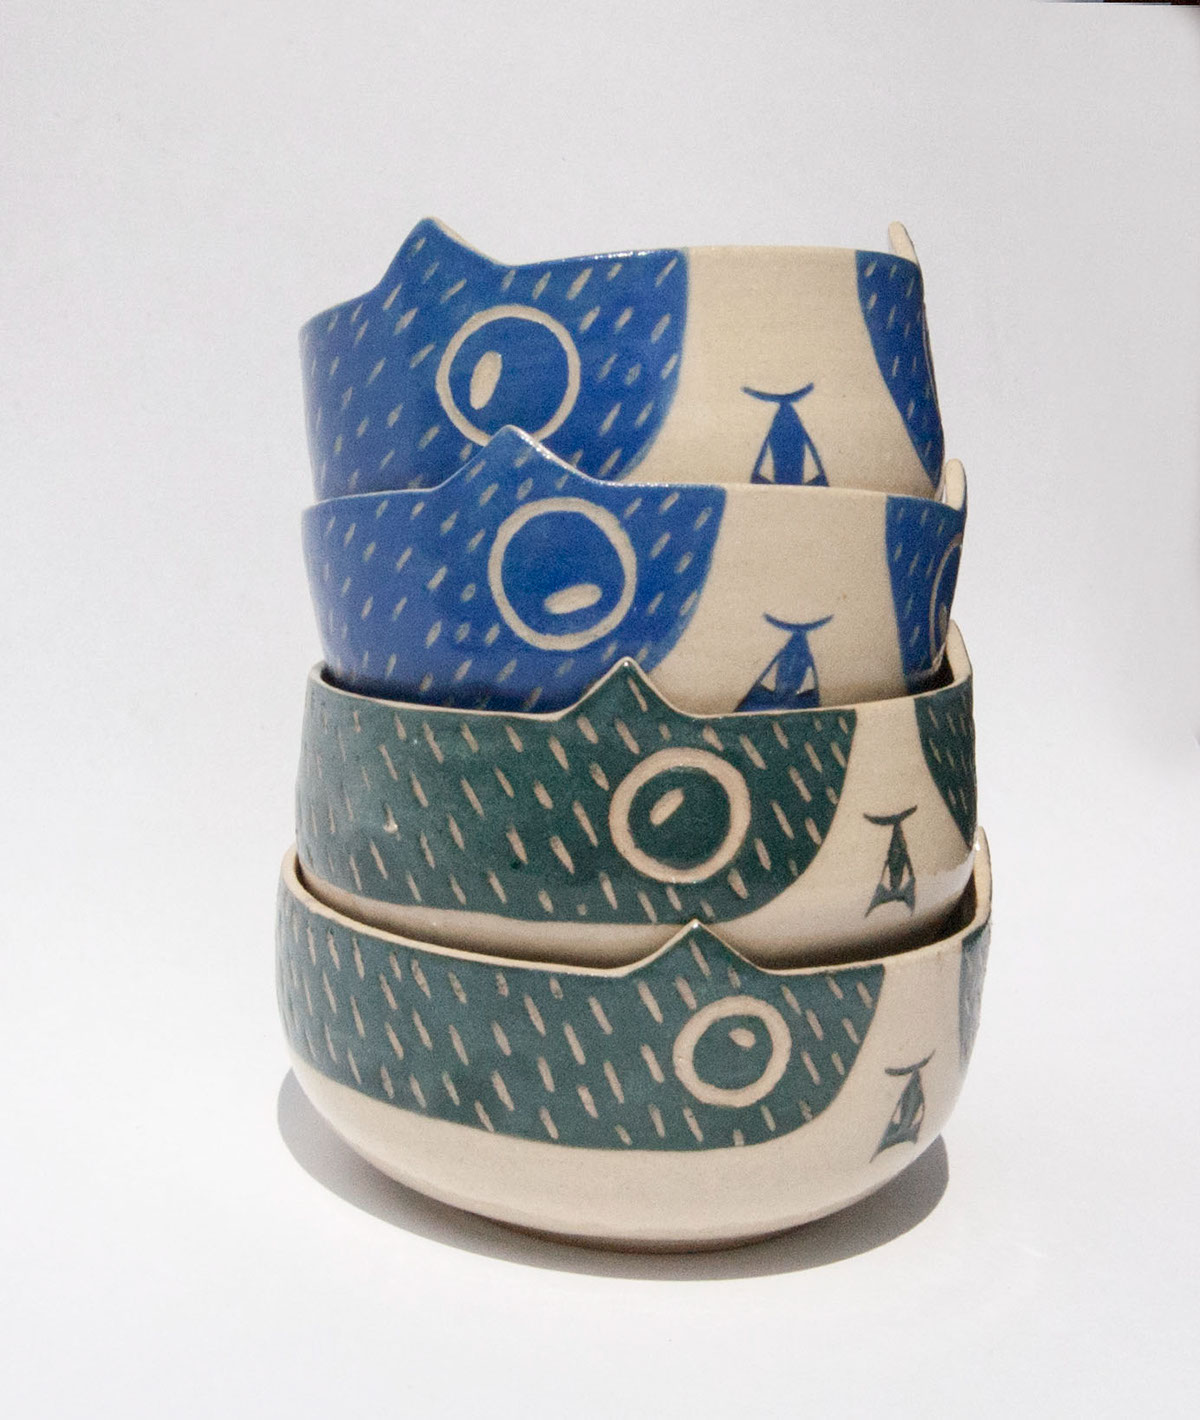 cats kitty bowls Pottery ceramics  sgraffito surface design ears